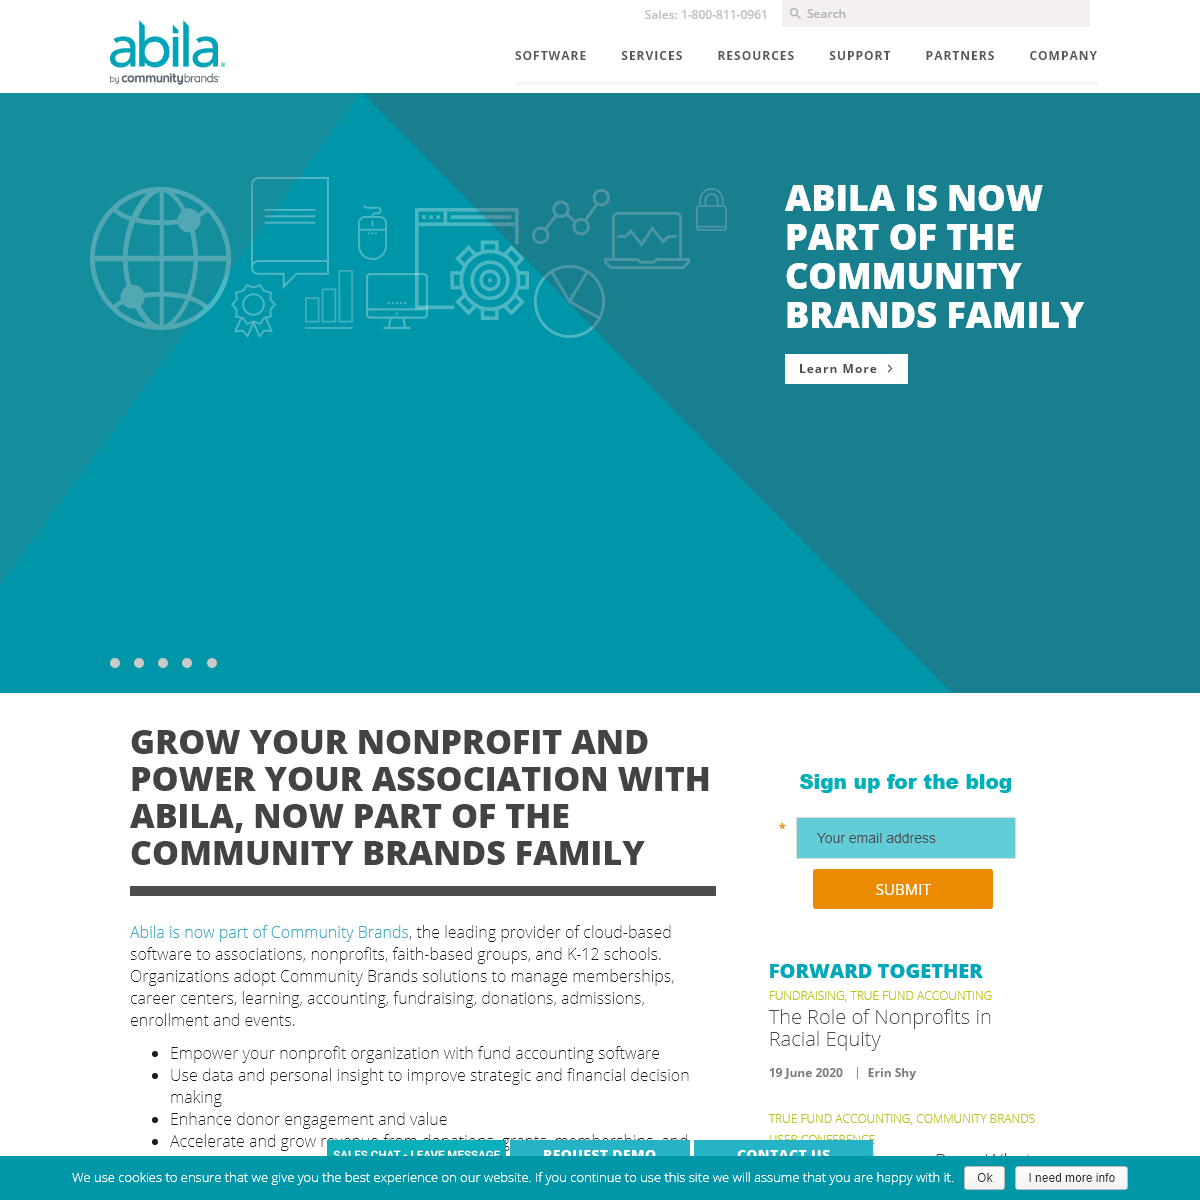 A complete backup of abila.com